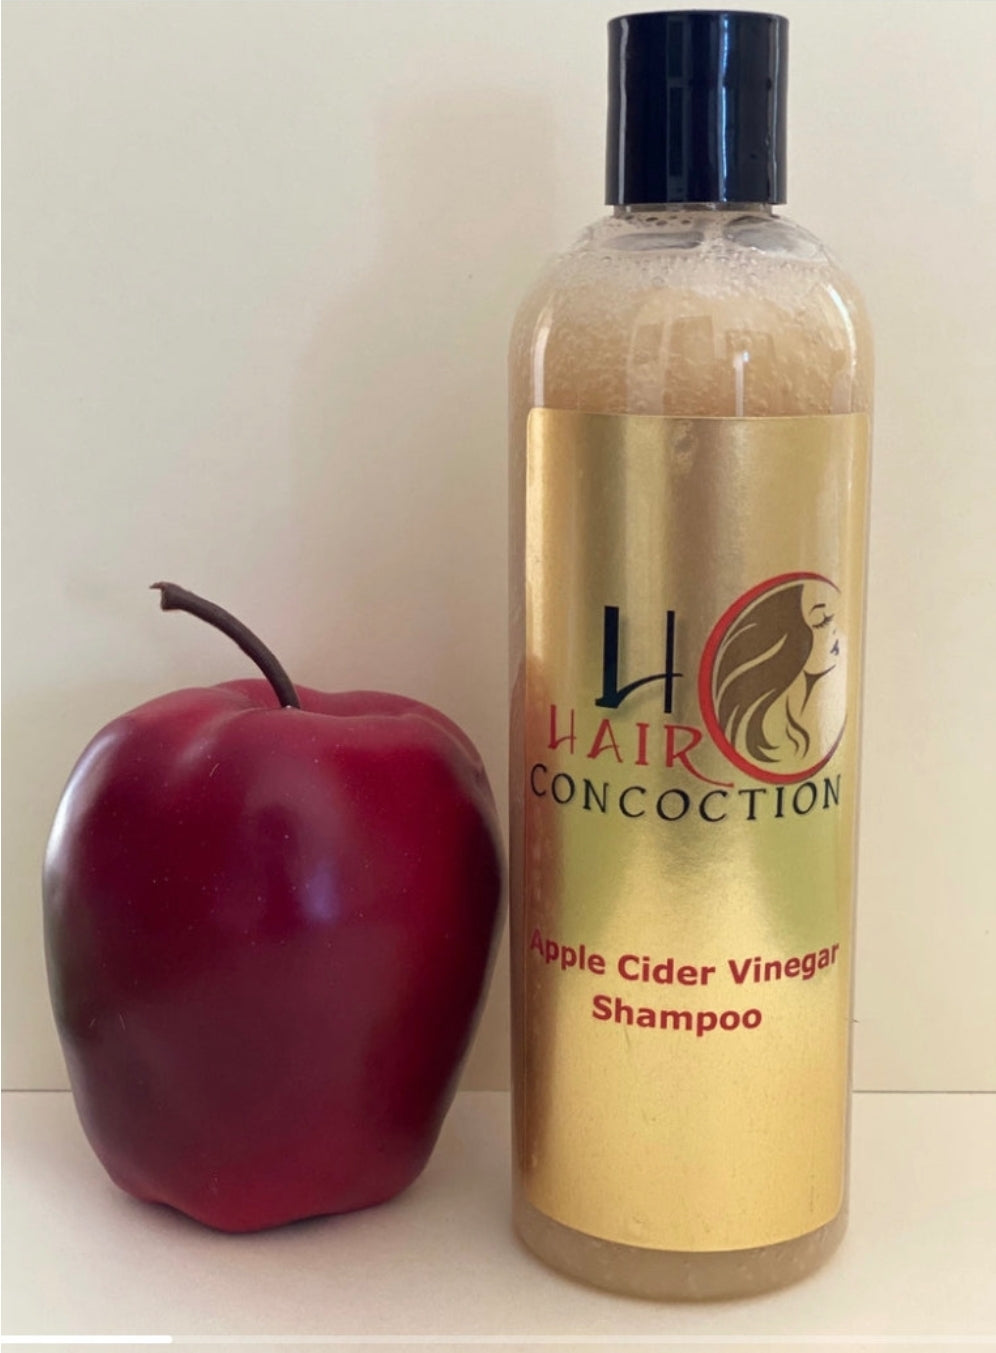 Hair Concoction Apple Cider Vinegar Shampoo 12oz